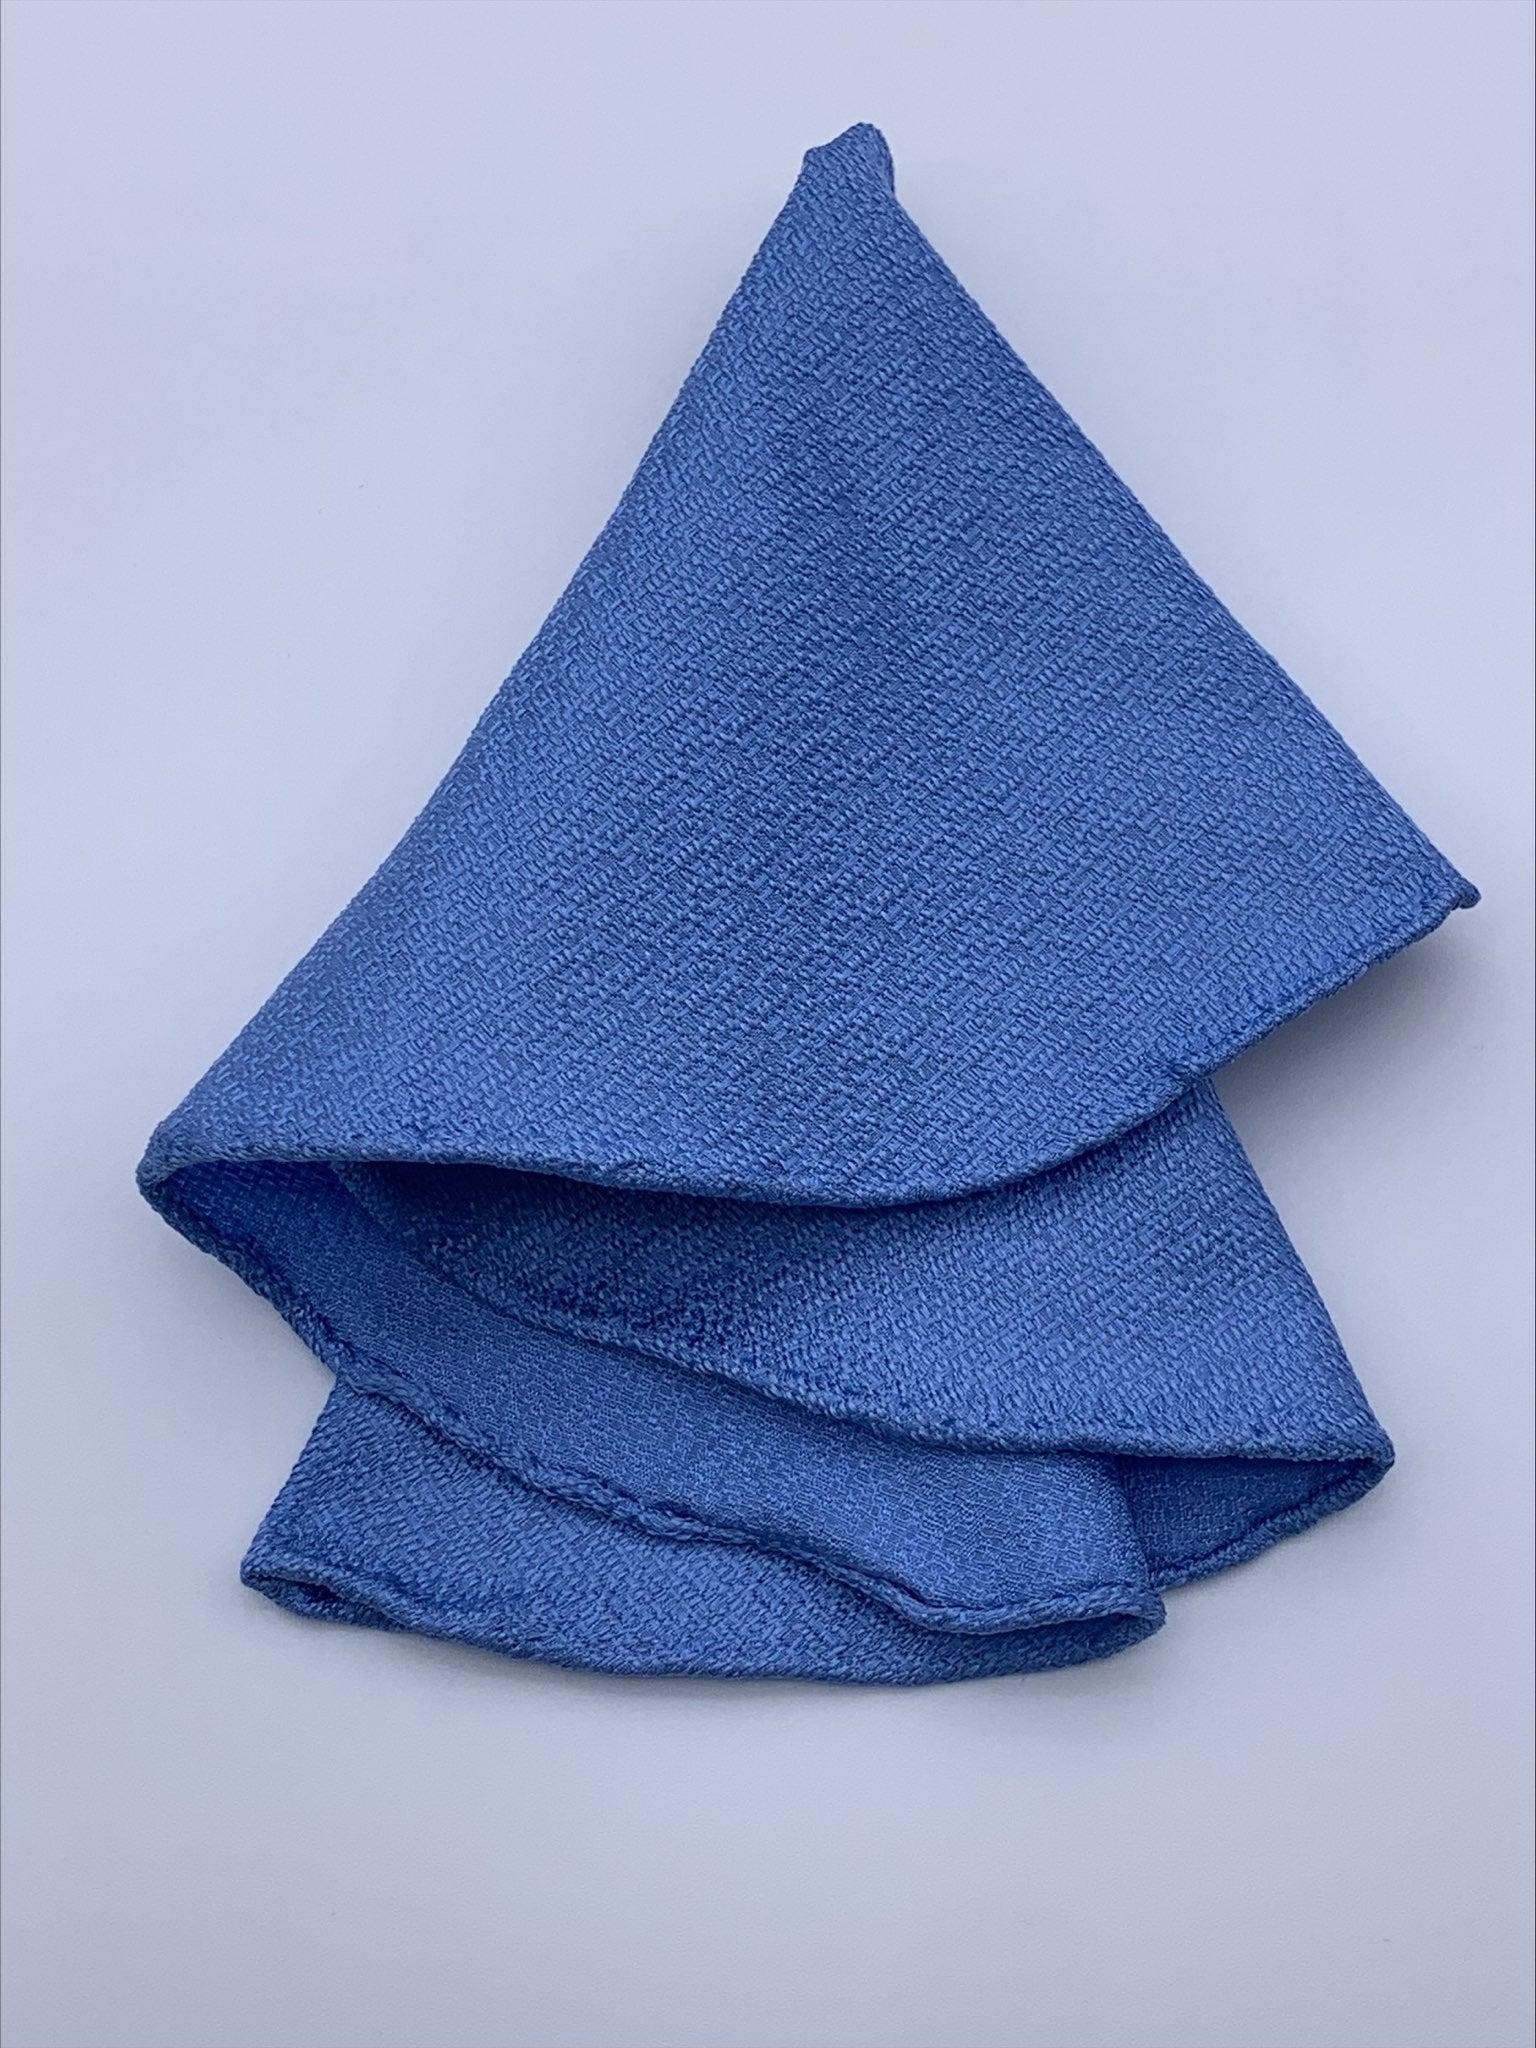 Light Blue Stone Pocket Square. 100% pure Italian silk pocket square. Hand-finished edges.| Sartoria Dei Duchi - Atri